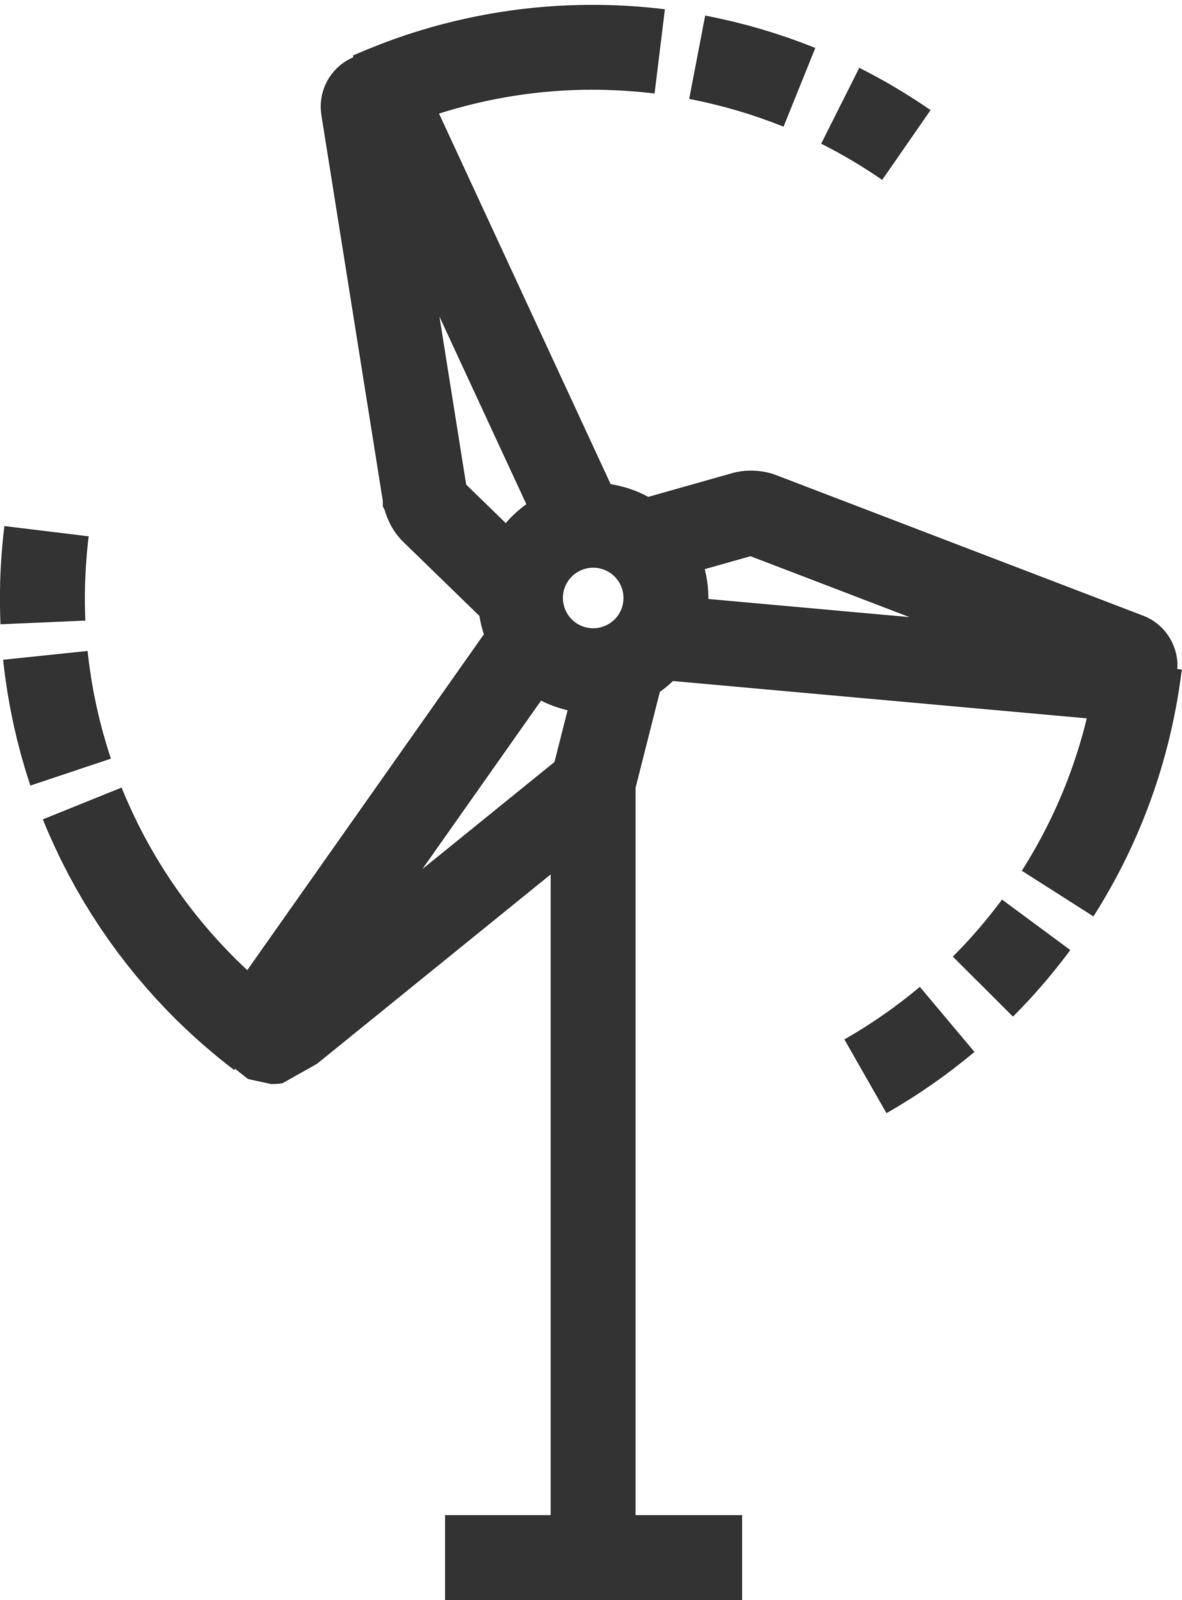 Outline Icon - Wind turbine by puruan